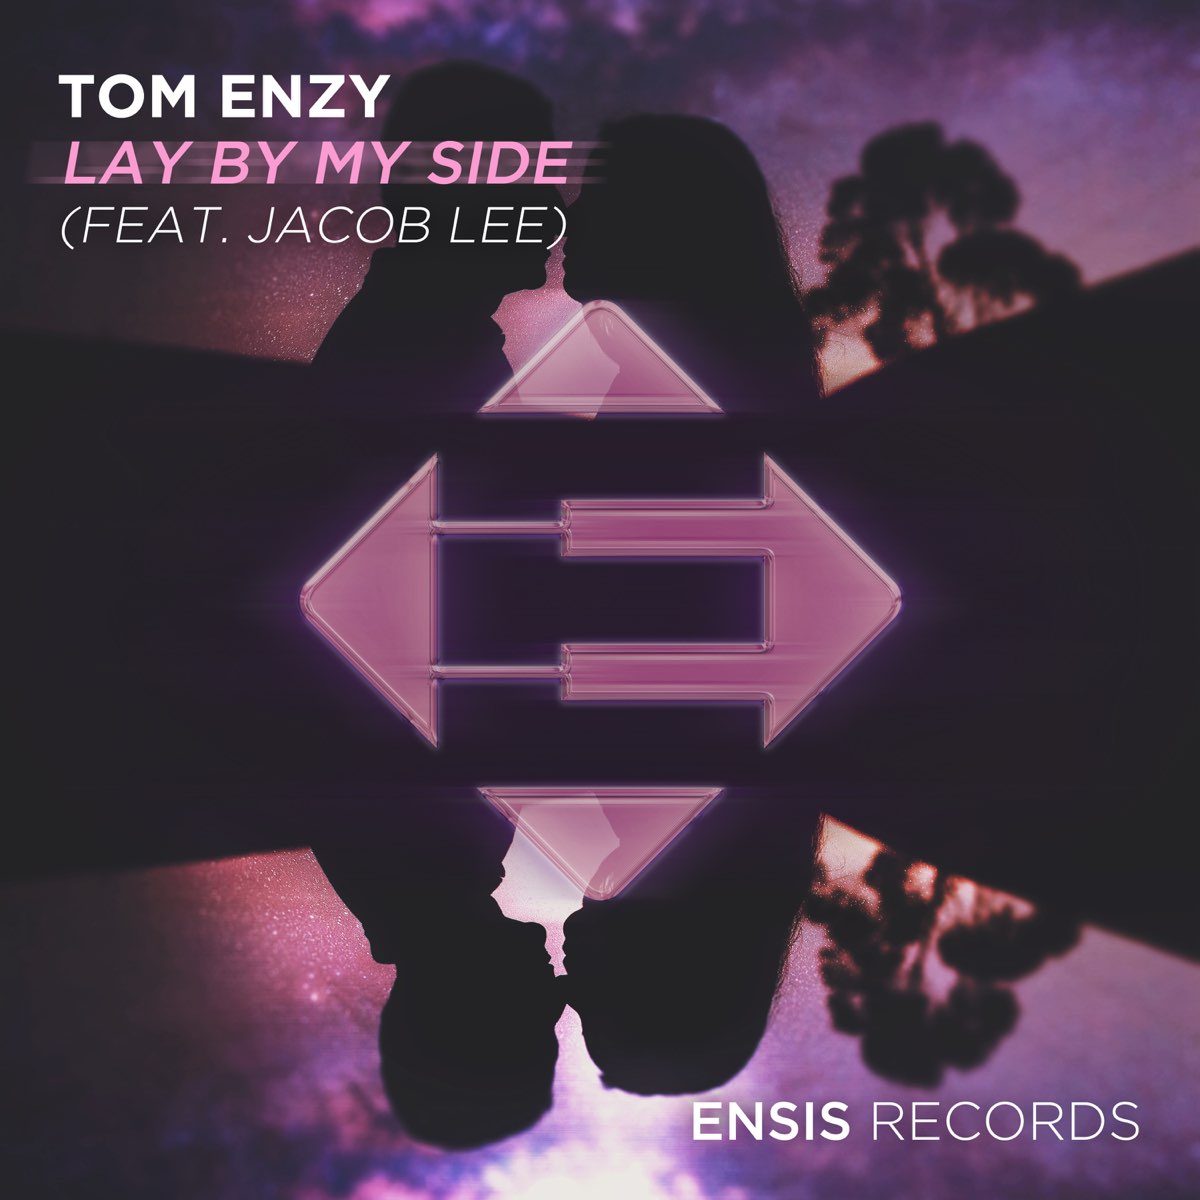 Jacob feat. Tom Enzy. Tom Enzy album. Lie песня. Lain Lee.